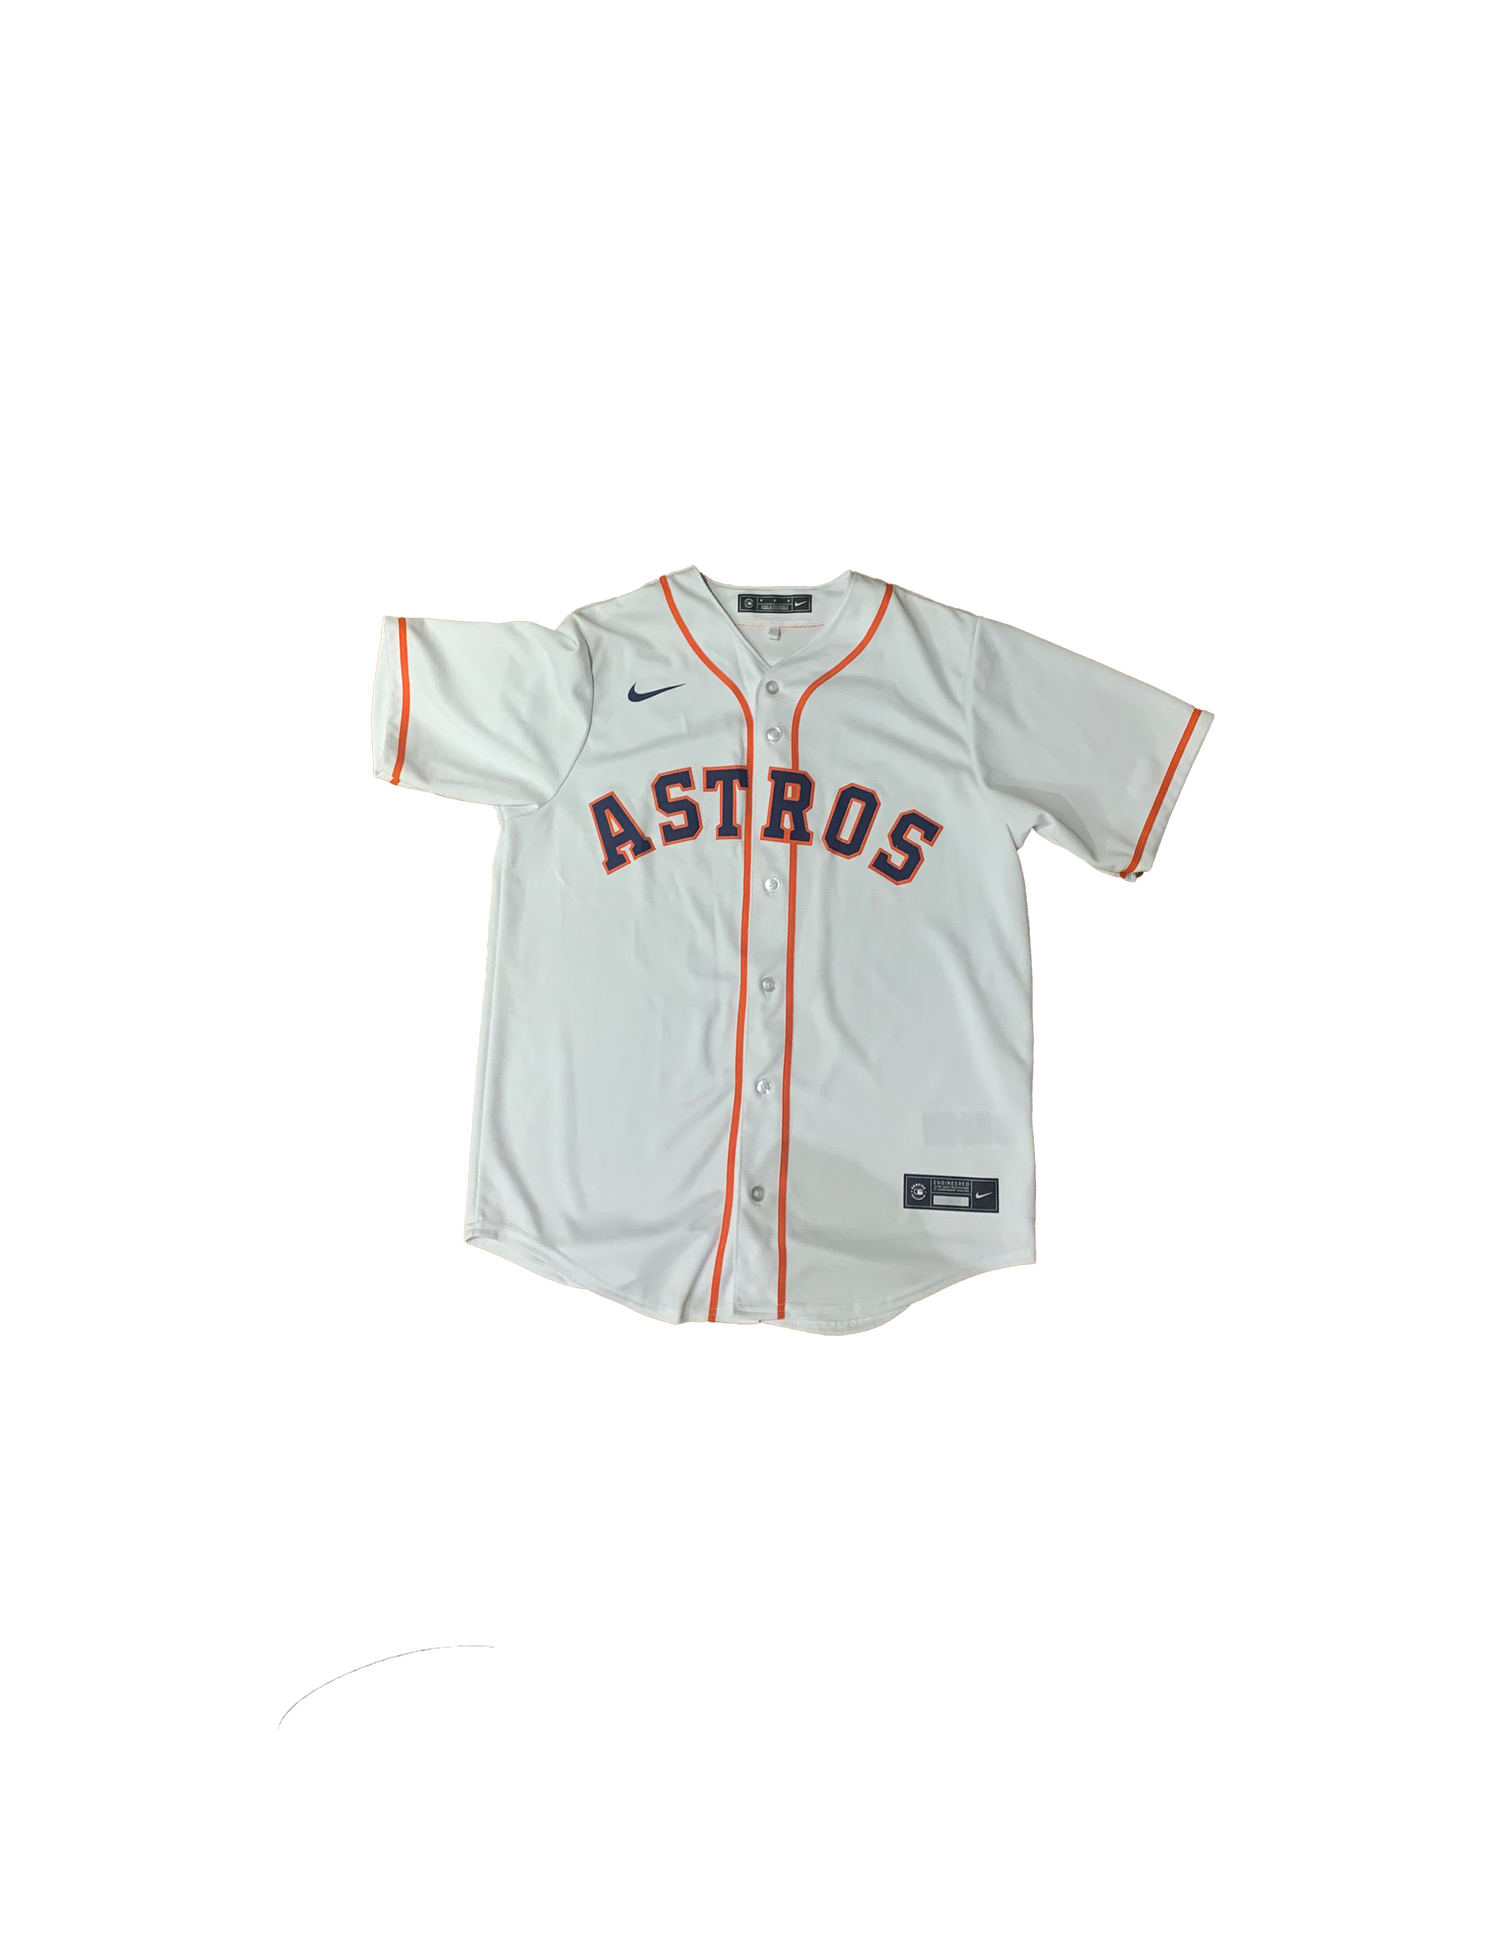 Astros Jersey — MINDSET